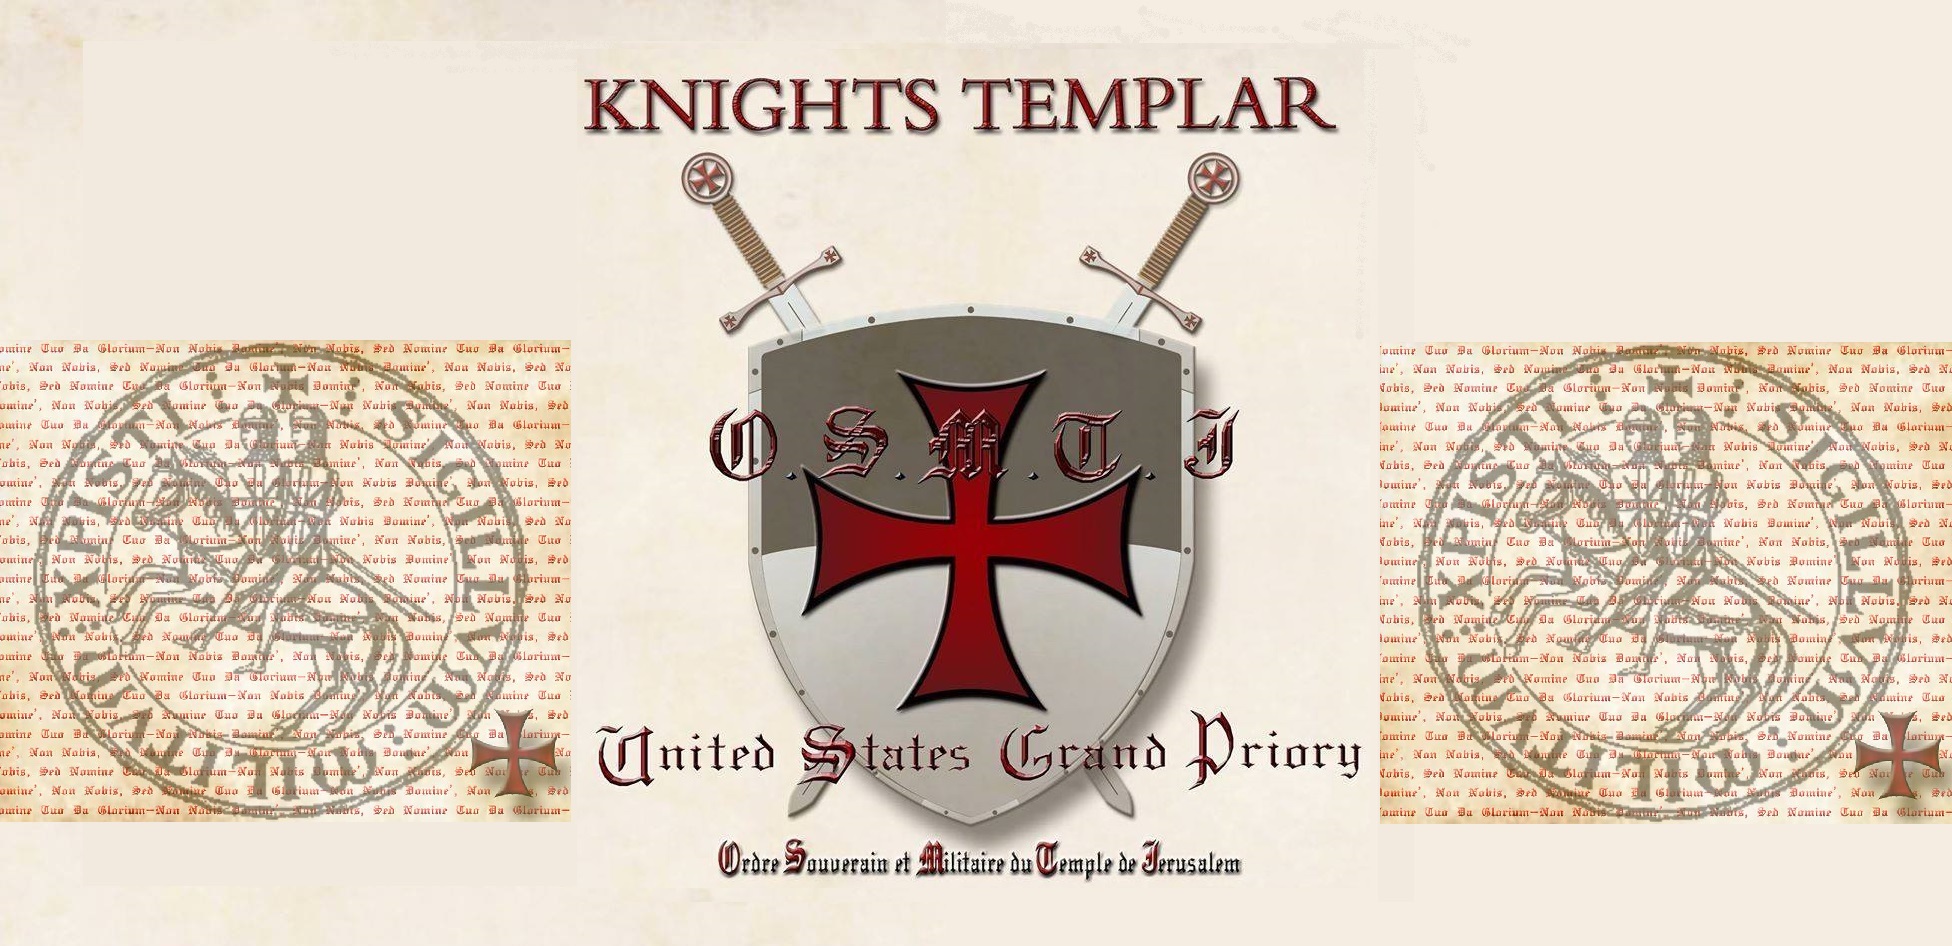 Resultado de imagen para united states knights templar